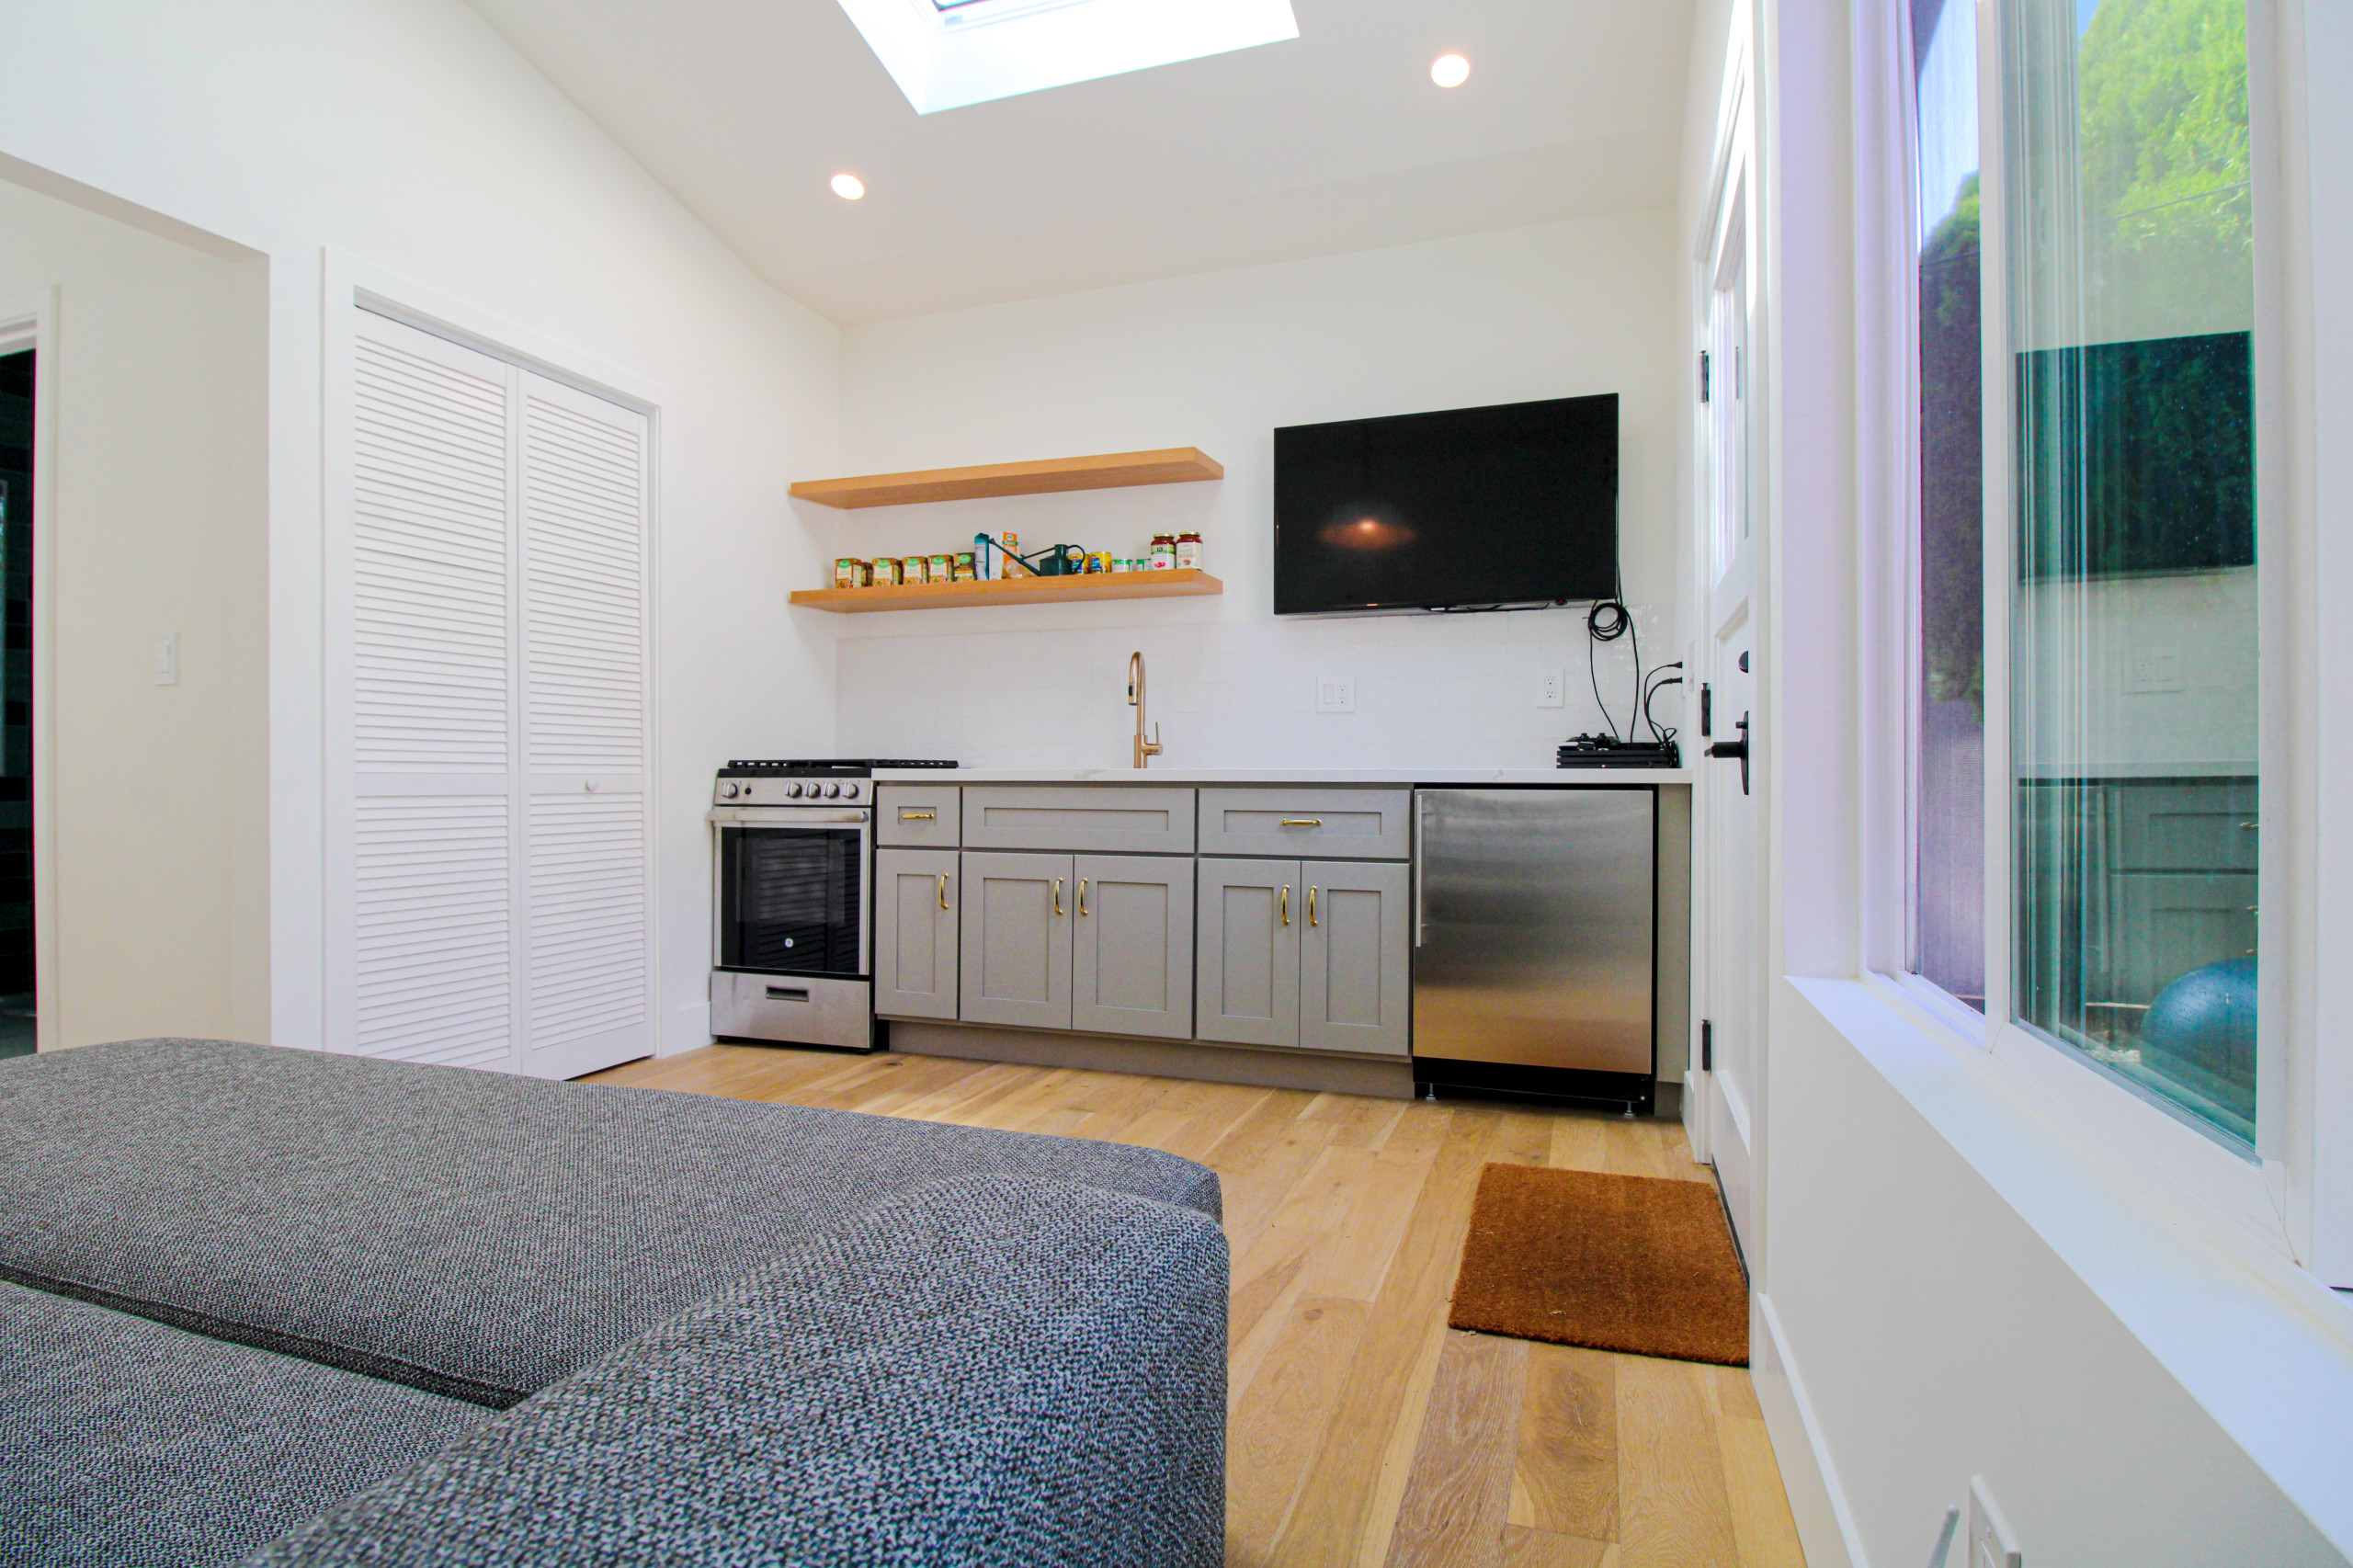 Eagle Rock, CA / Complete Accessory Dwelling Unit  Build / Kitchenette & Main